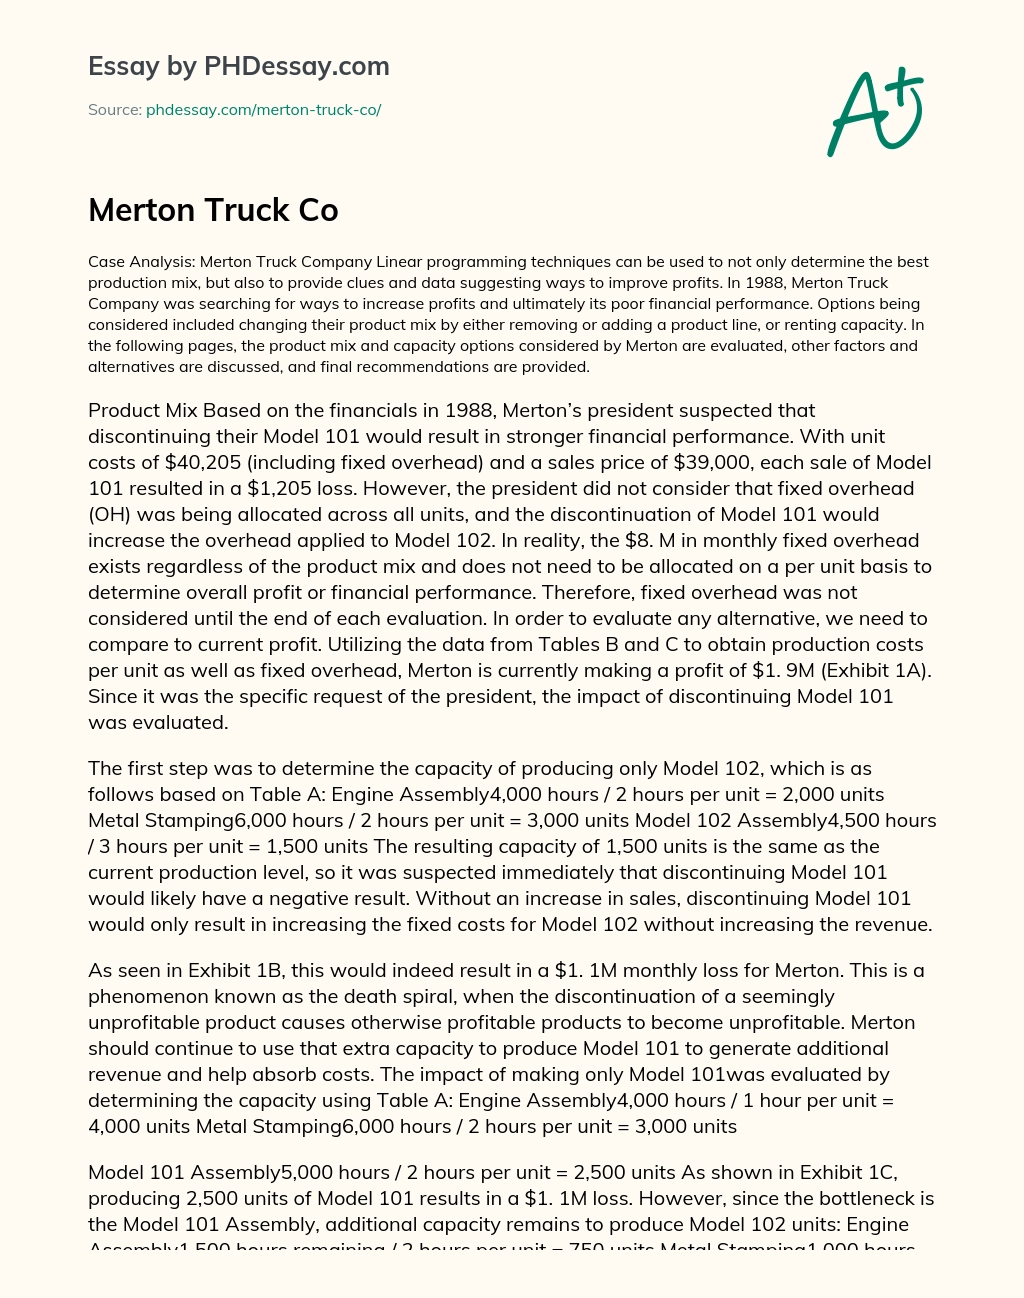 Merton Truck Co essay